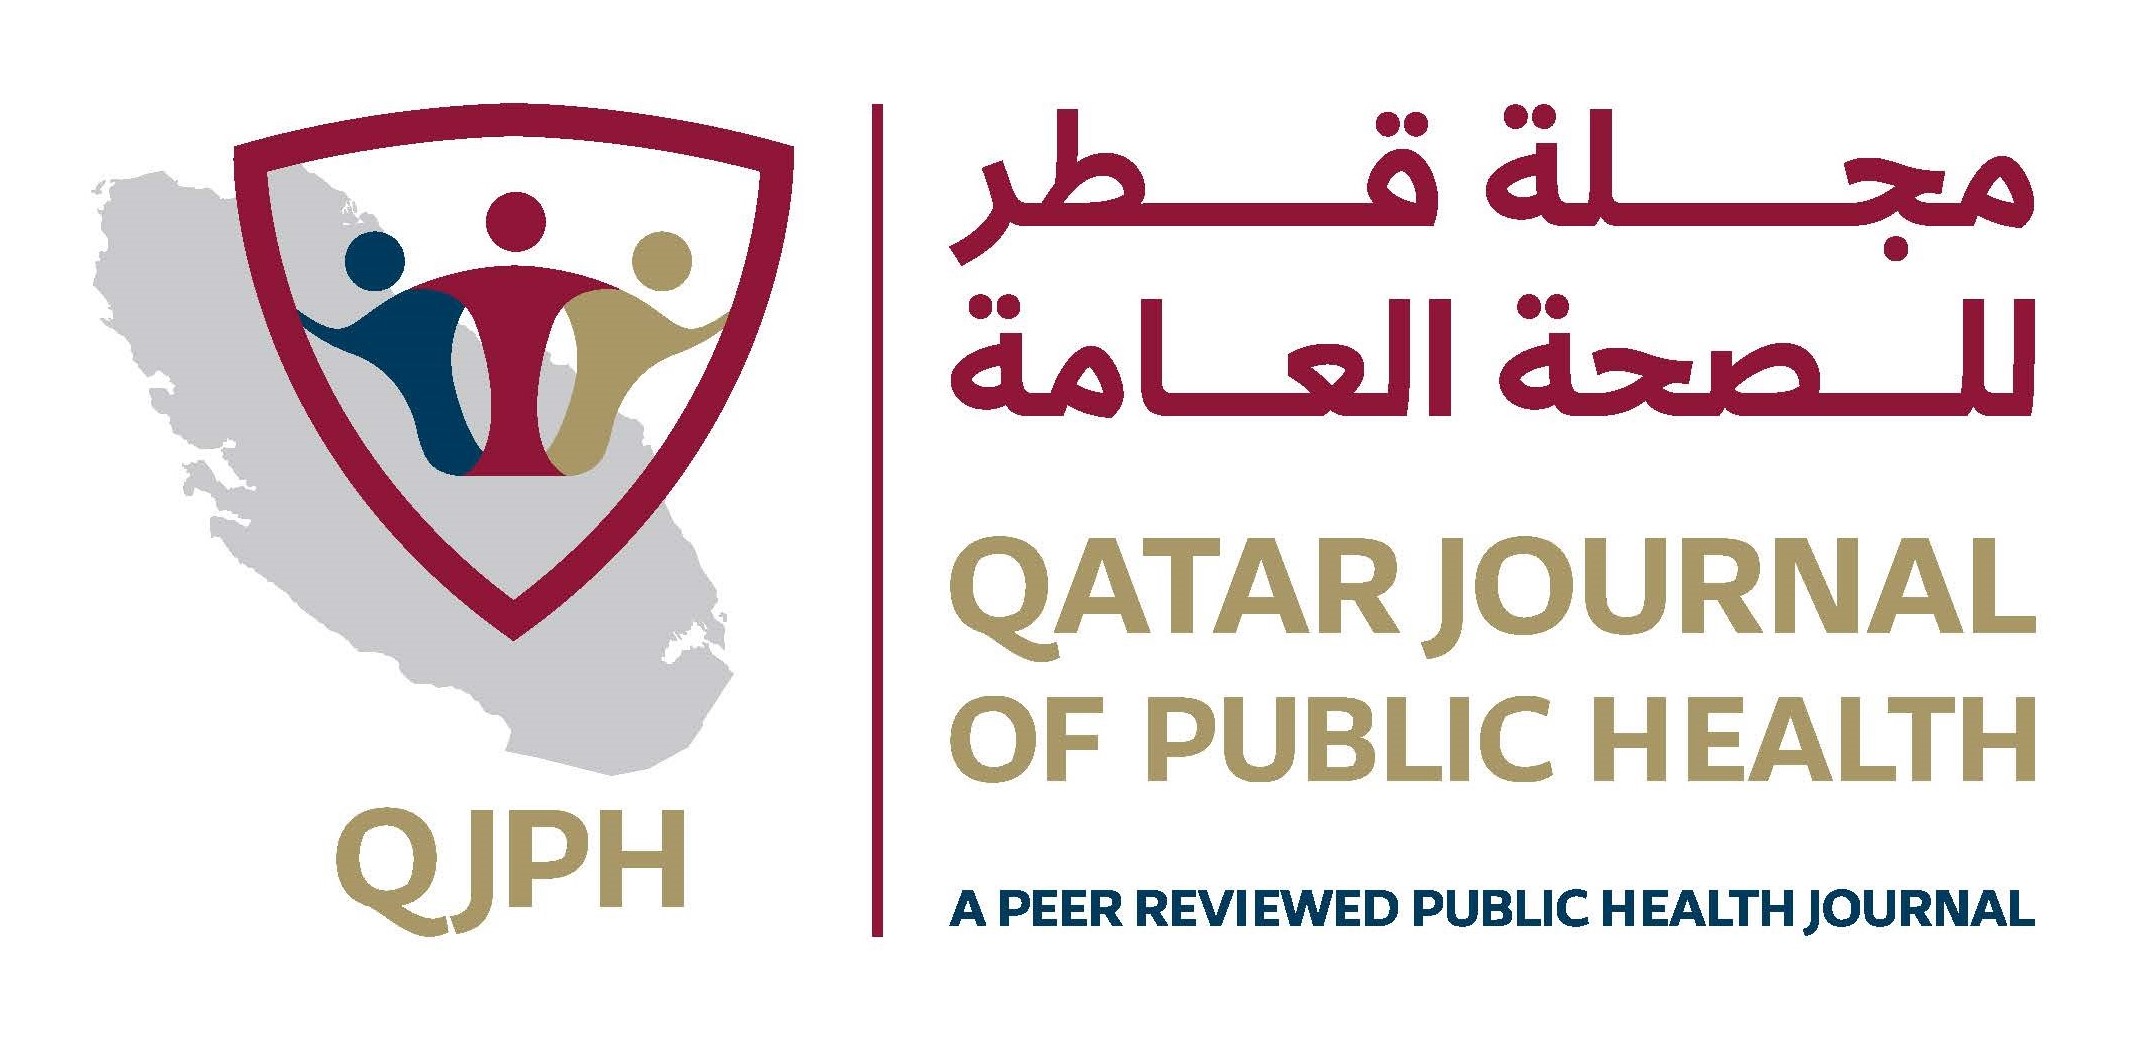 image of Qatar Journal of Public Health